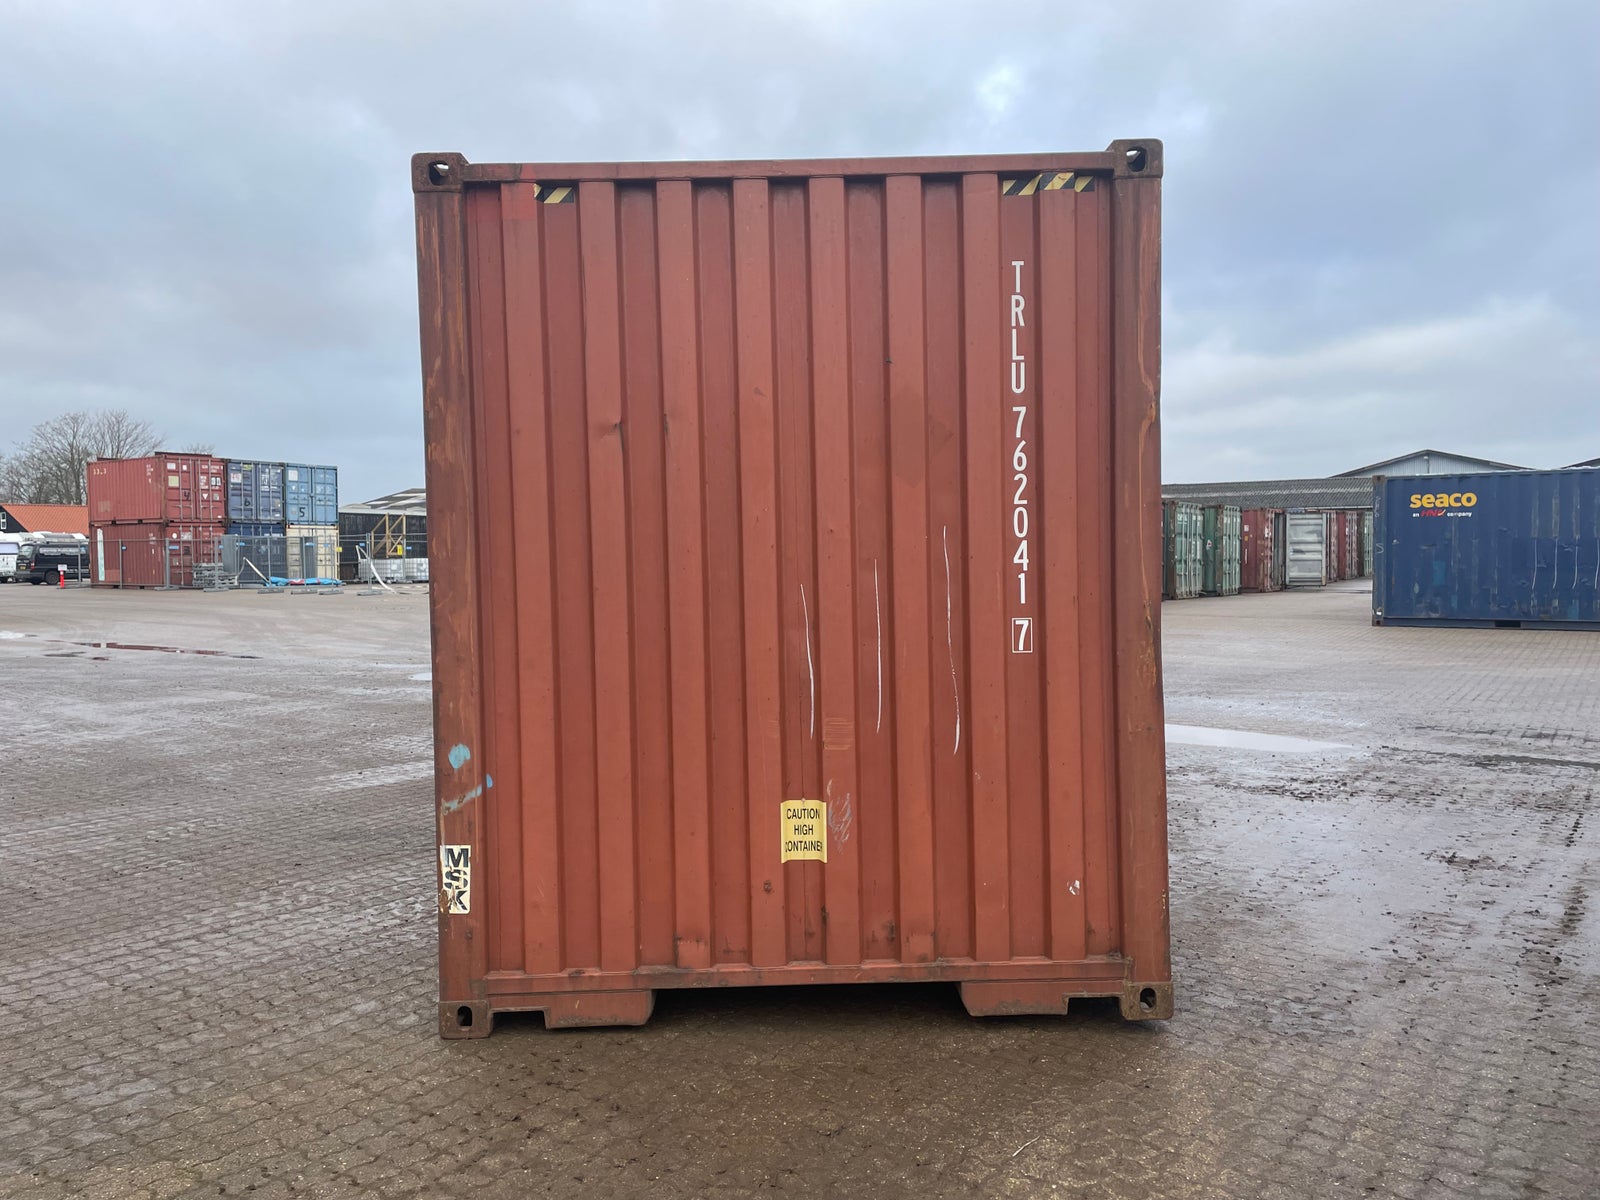 40 fods HC Container - ID: TRLU 762041-7